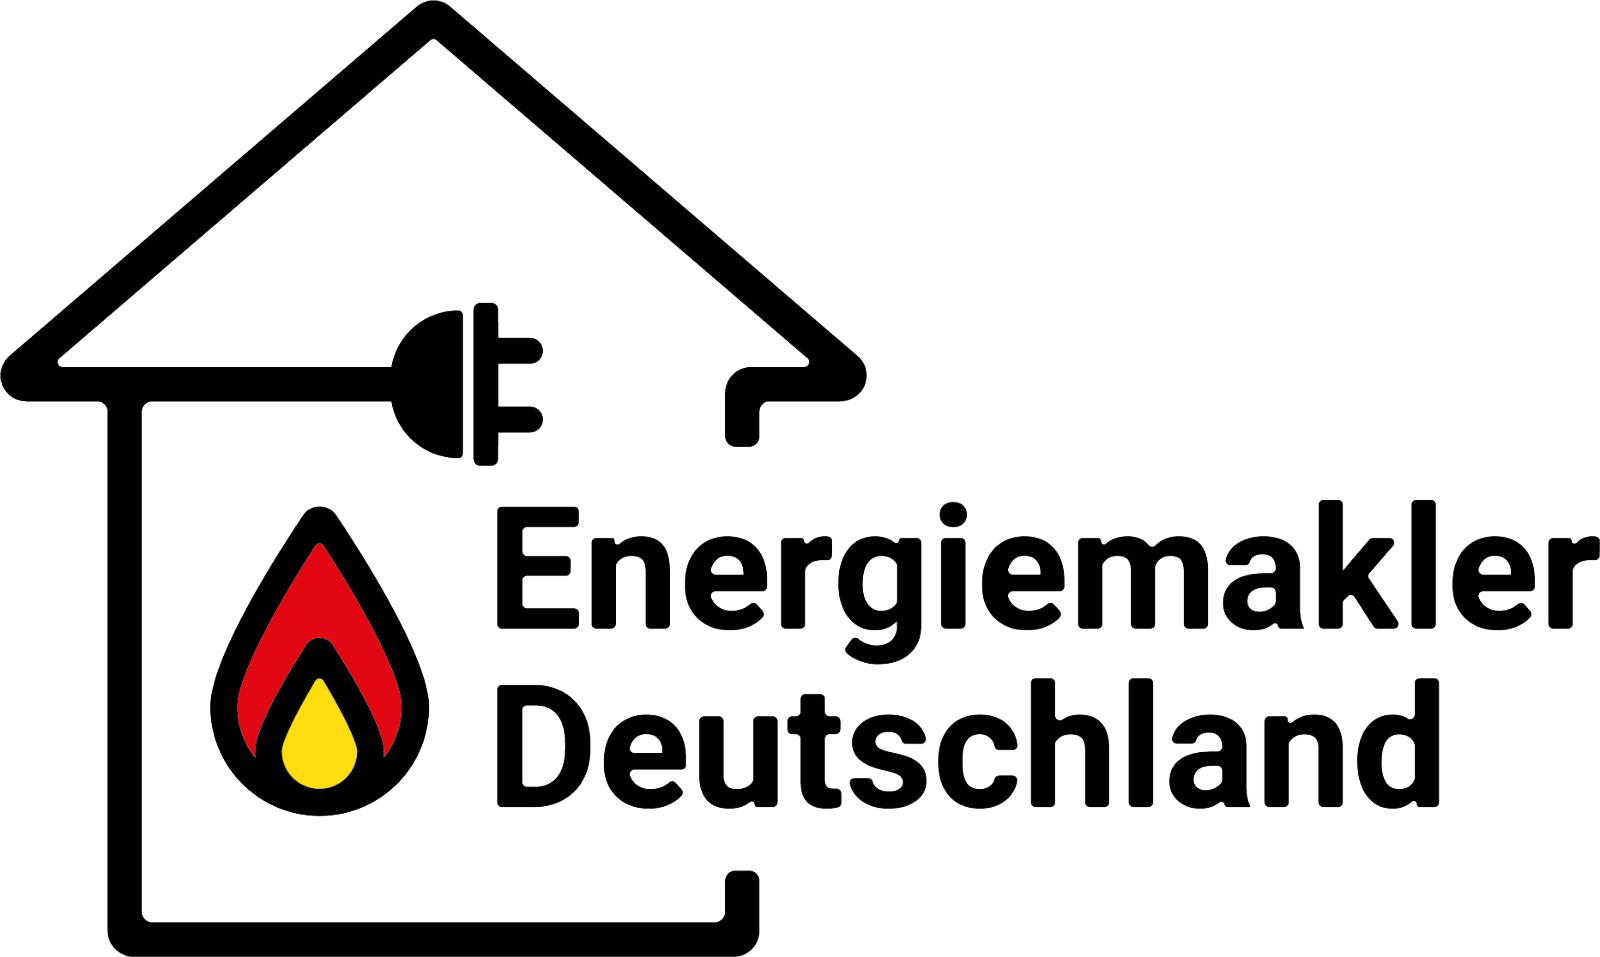 Energiemakler Deutschland